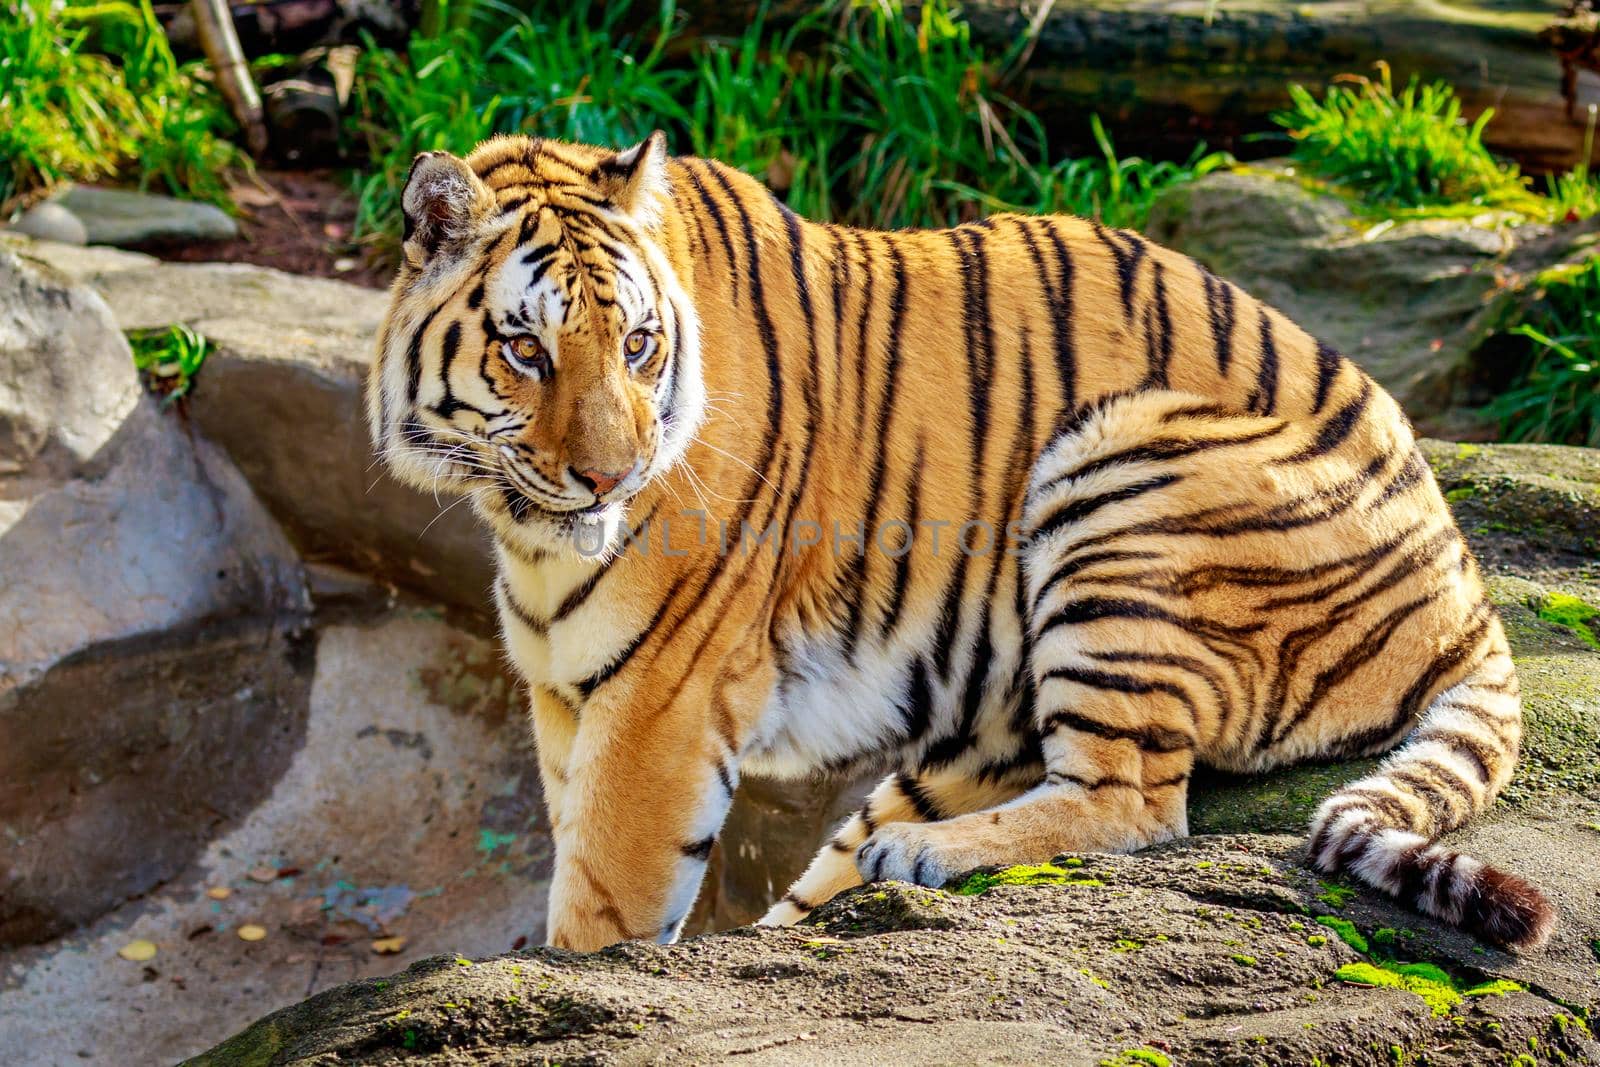 Close-up of Siberian tiger, also known as Amur Tiger (Panthera tigris altaica).